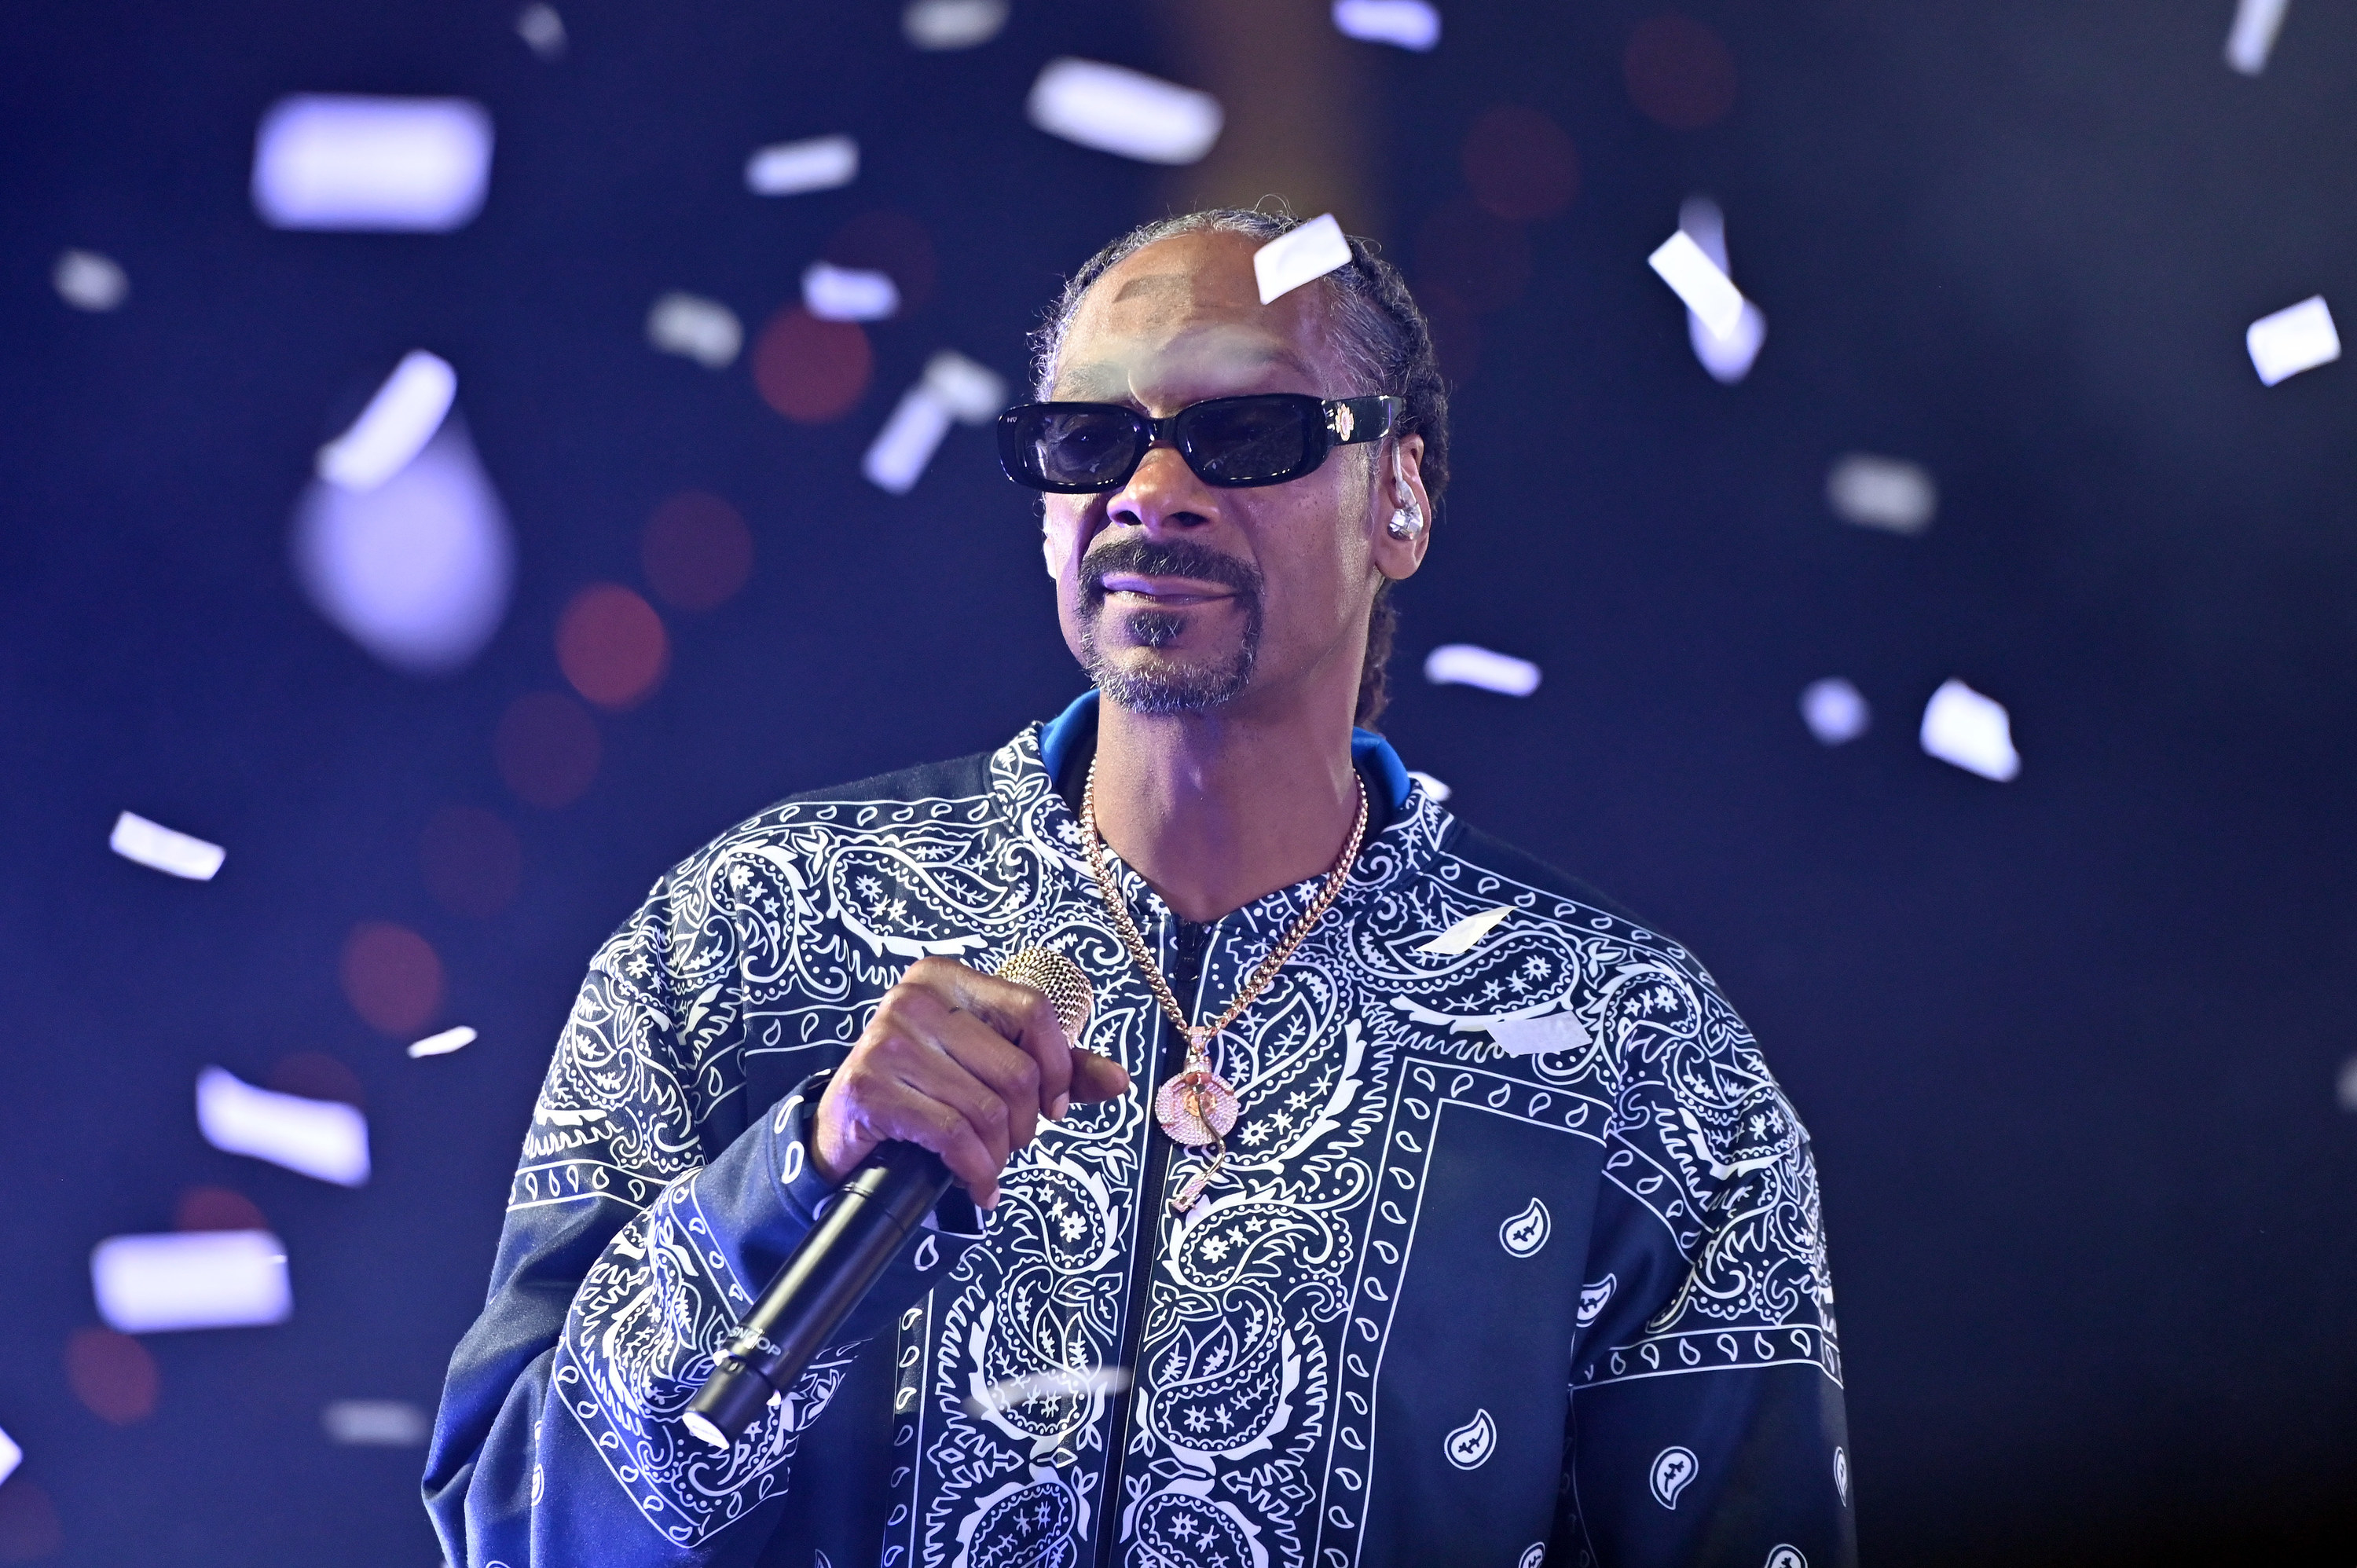 Snoop Dogg performs at Rupp Arena in Lexington, Kentucky